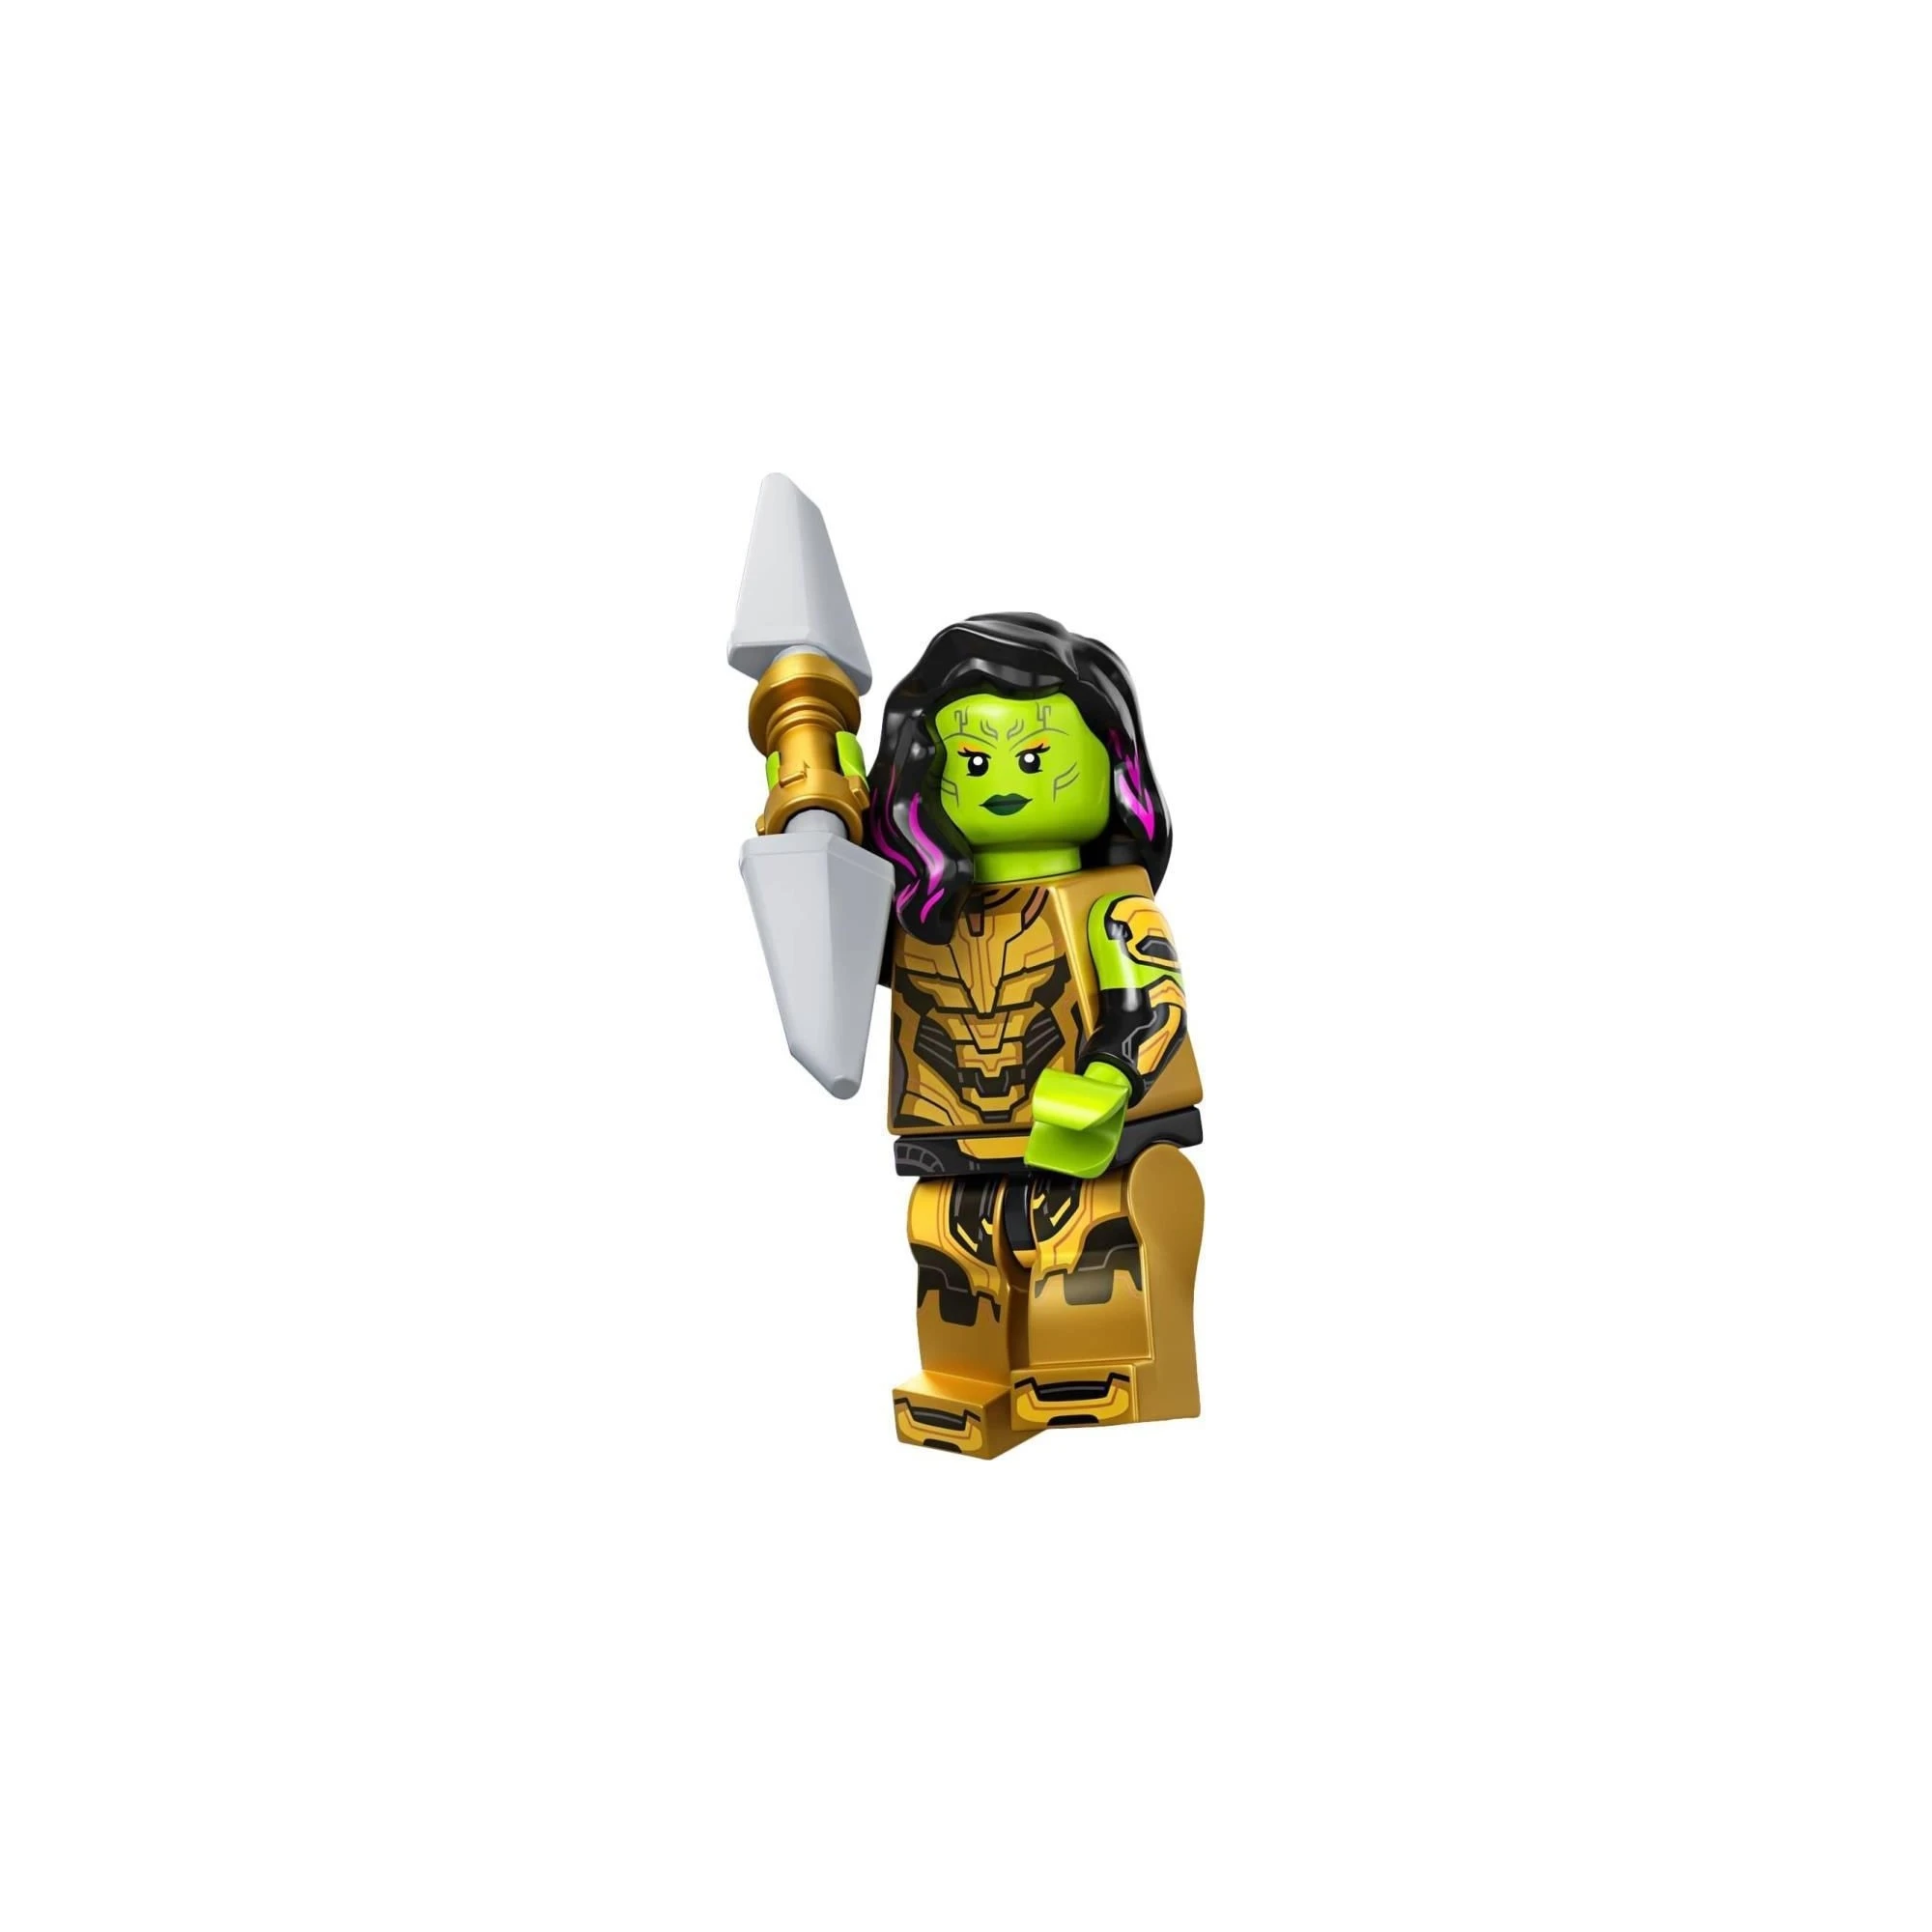 Конструктор LEGO Minifigures Gamora With Blade Of Thanos (71031-12)